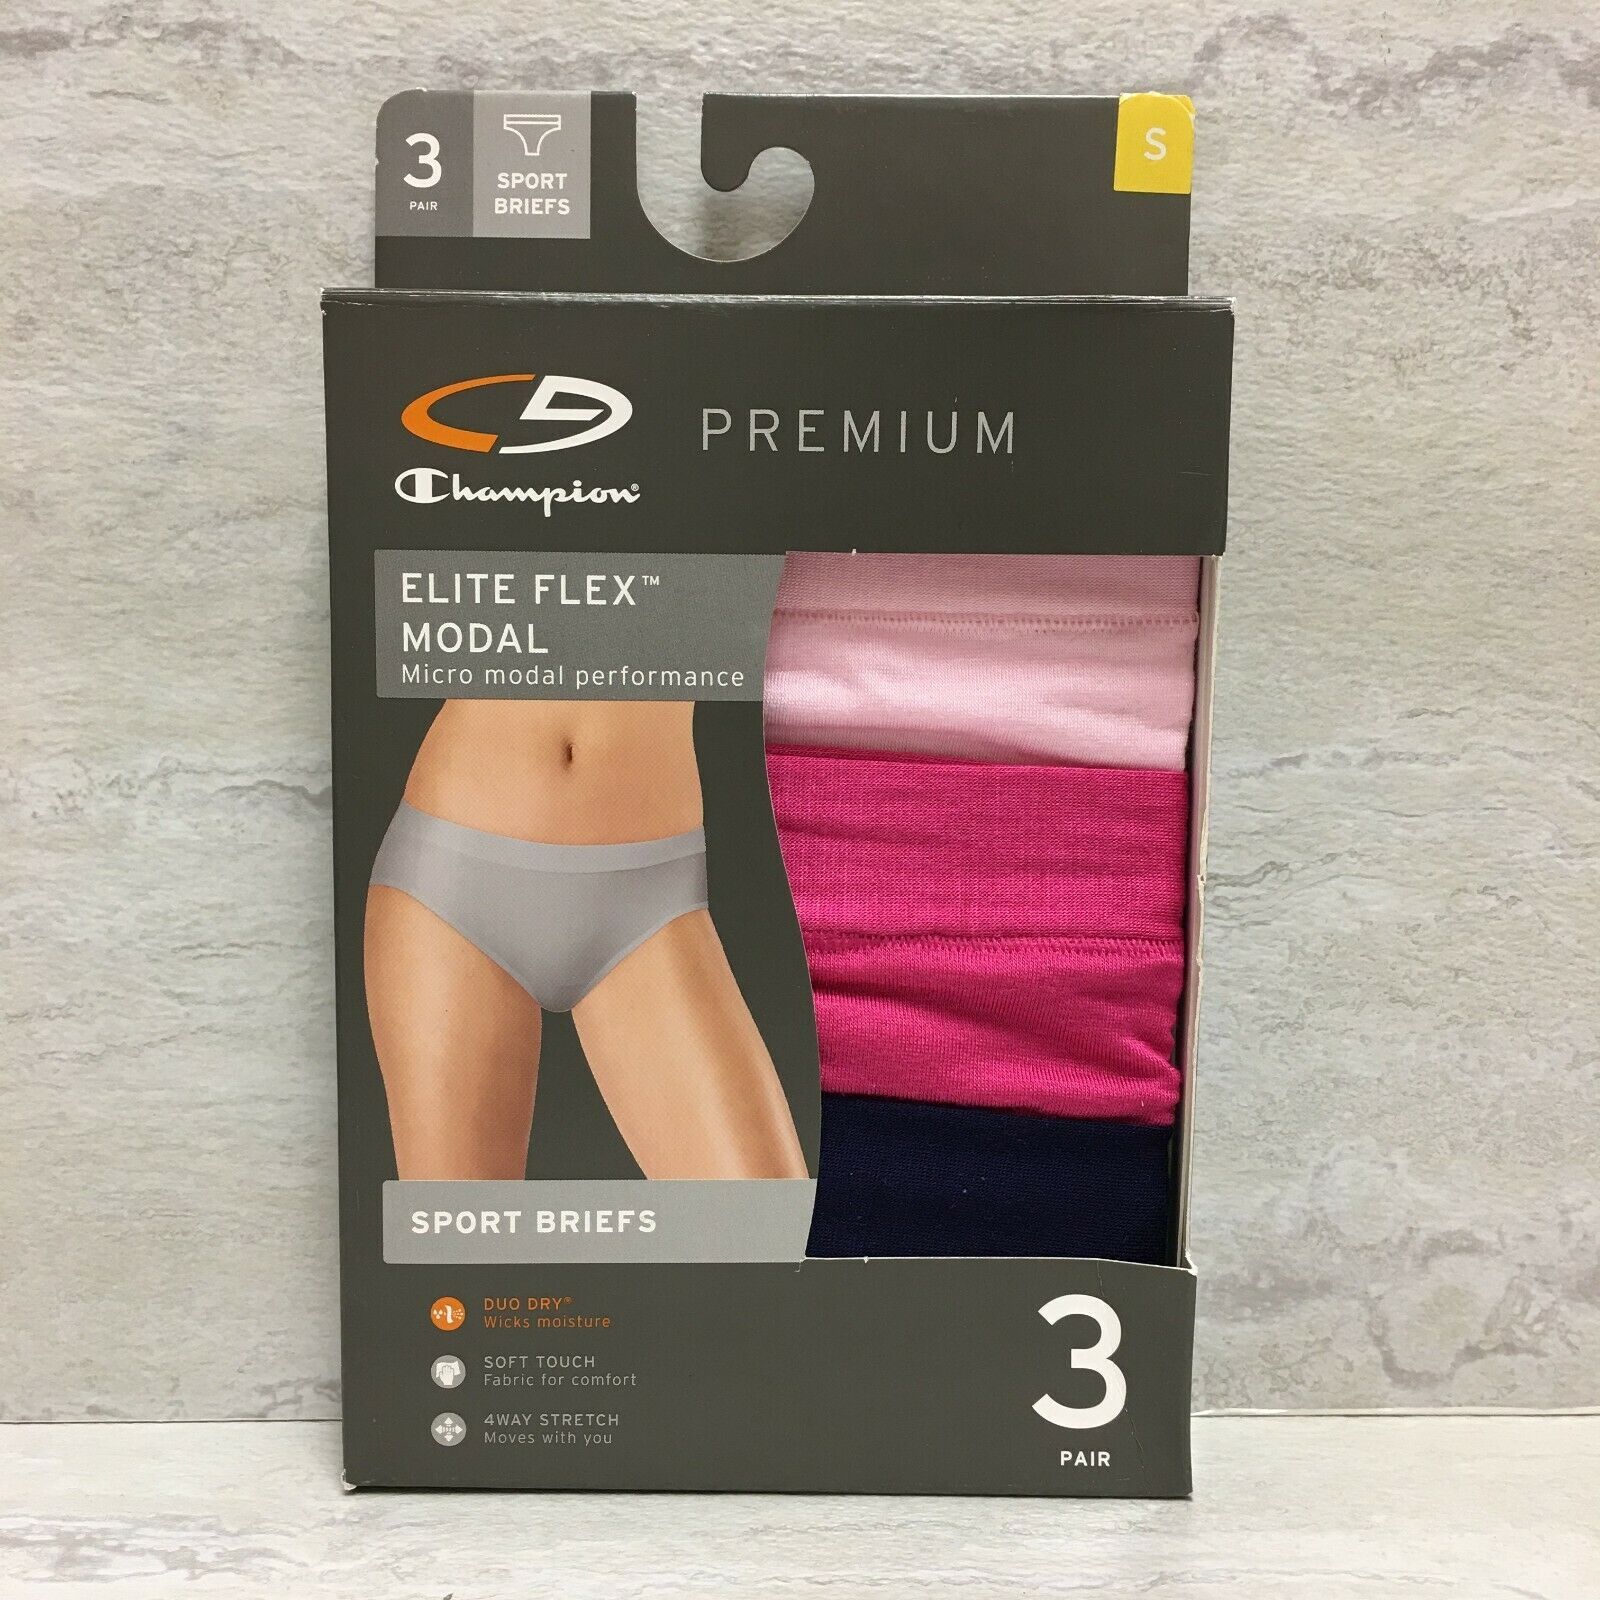 C9 Champion Women's 3pk Premium Elite Flex Modal Sport Briefs, Pink/Blue, Small